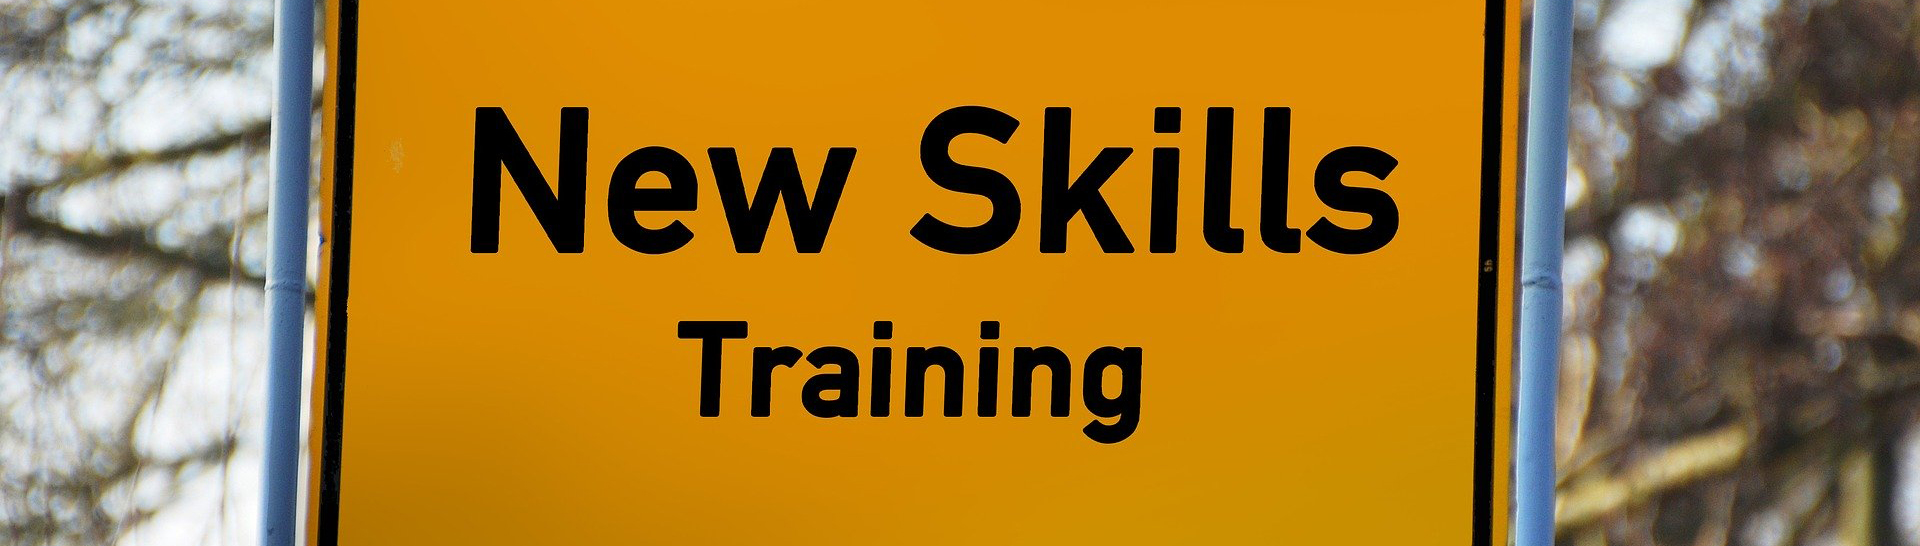 New Skills Training road sign